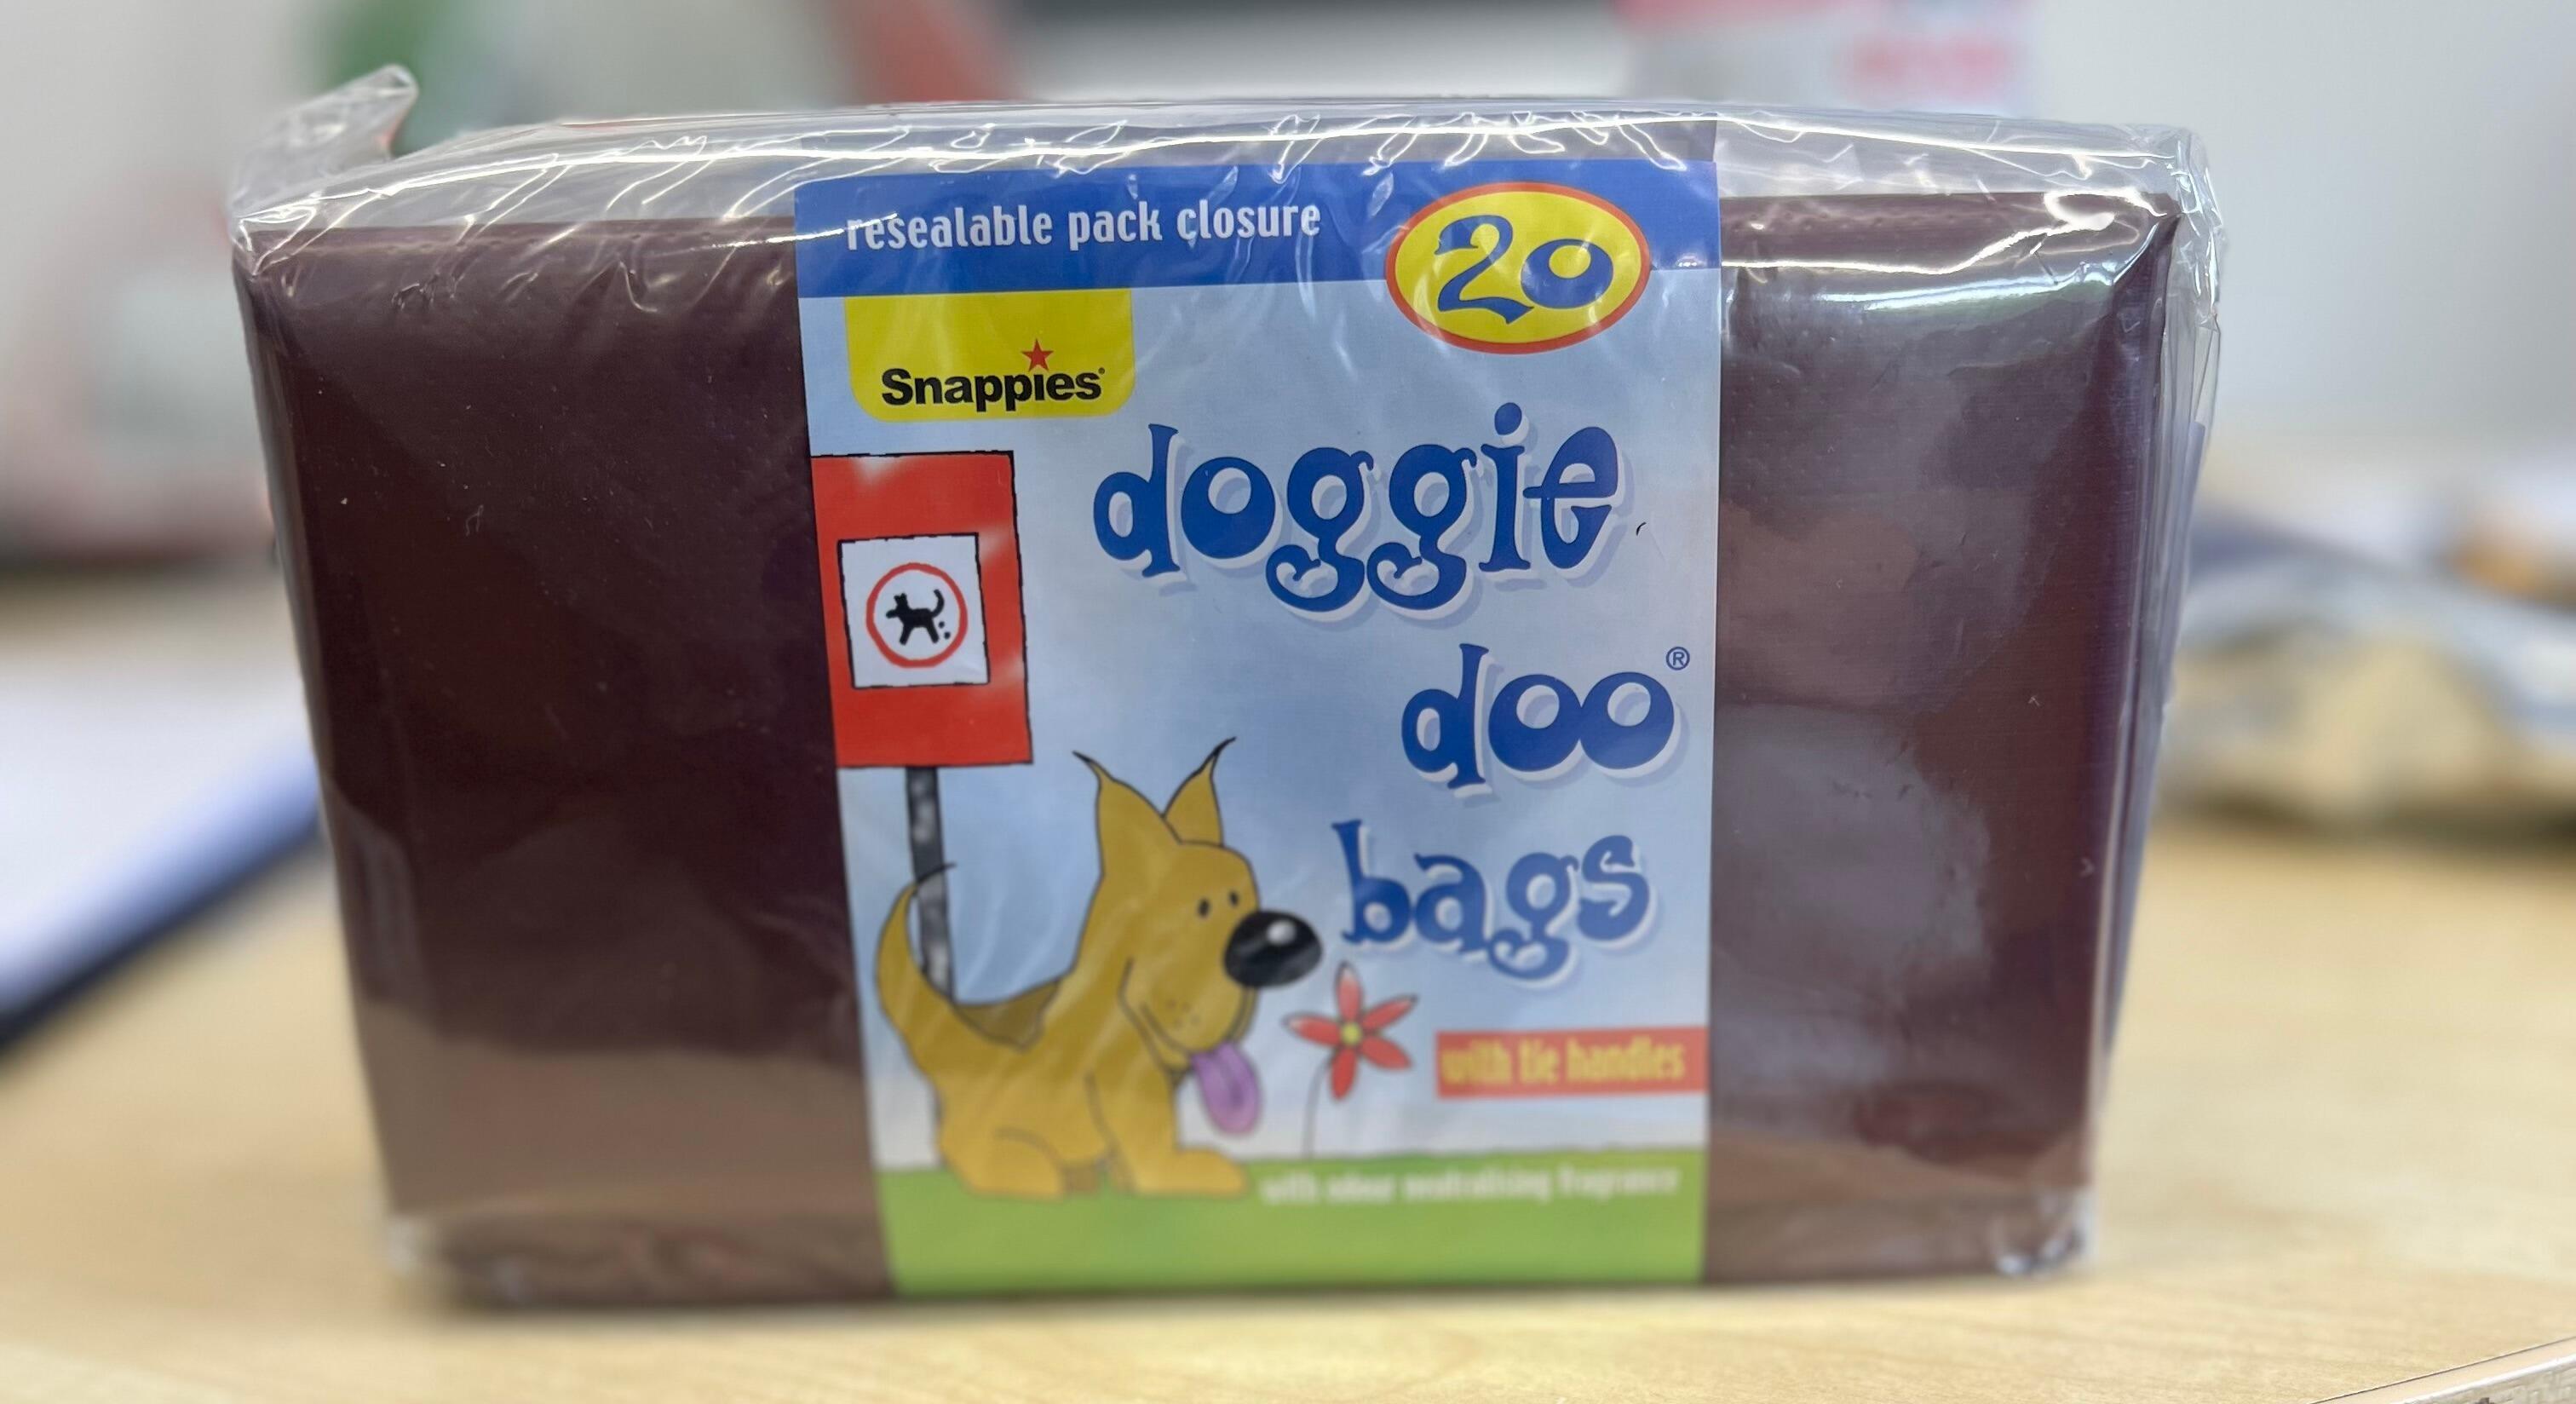 Snappies Doggie doo bags